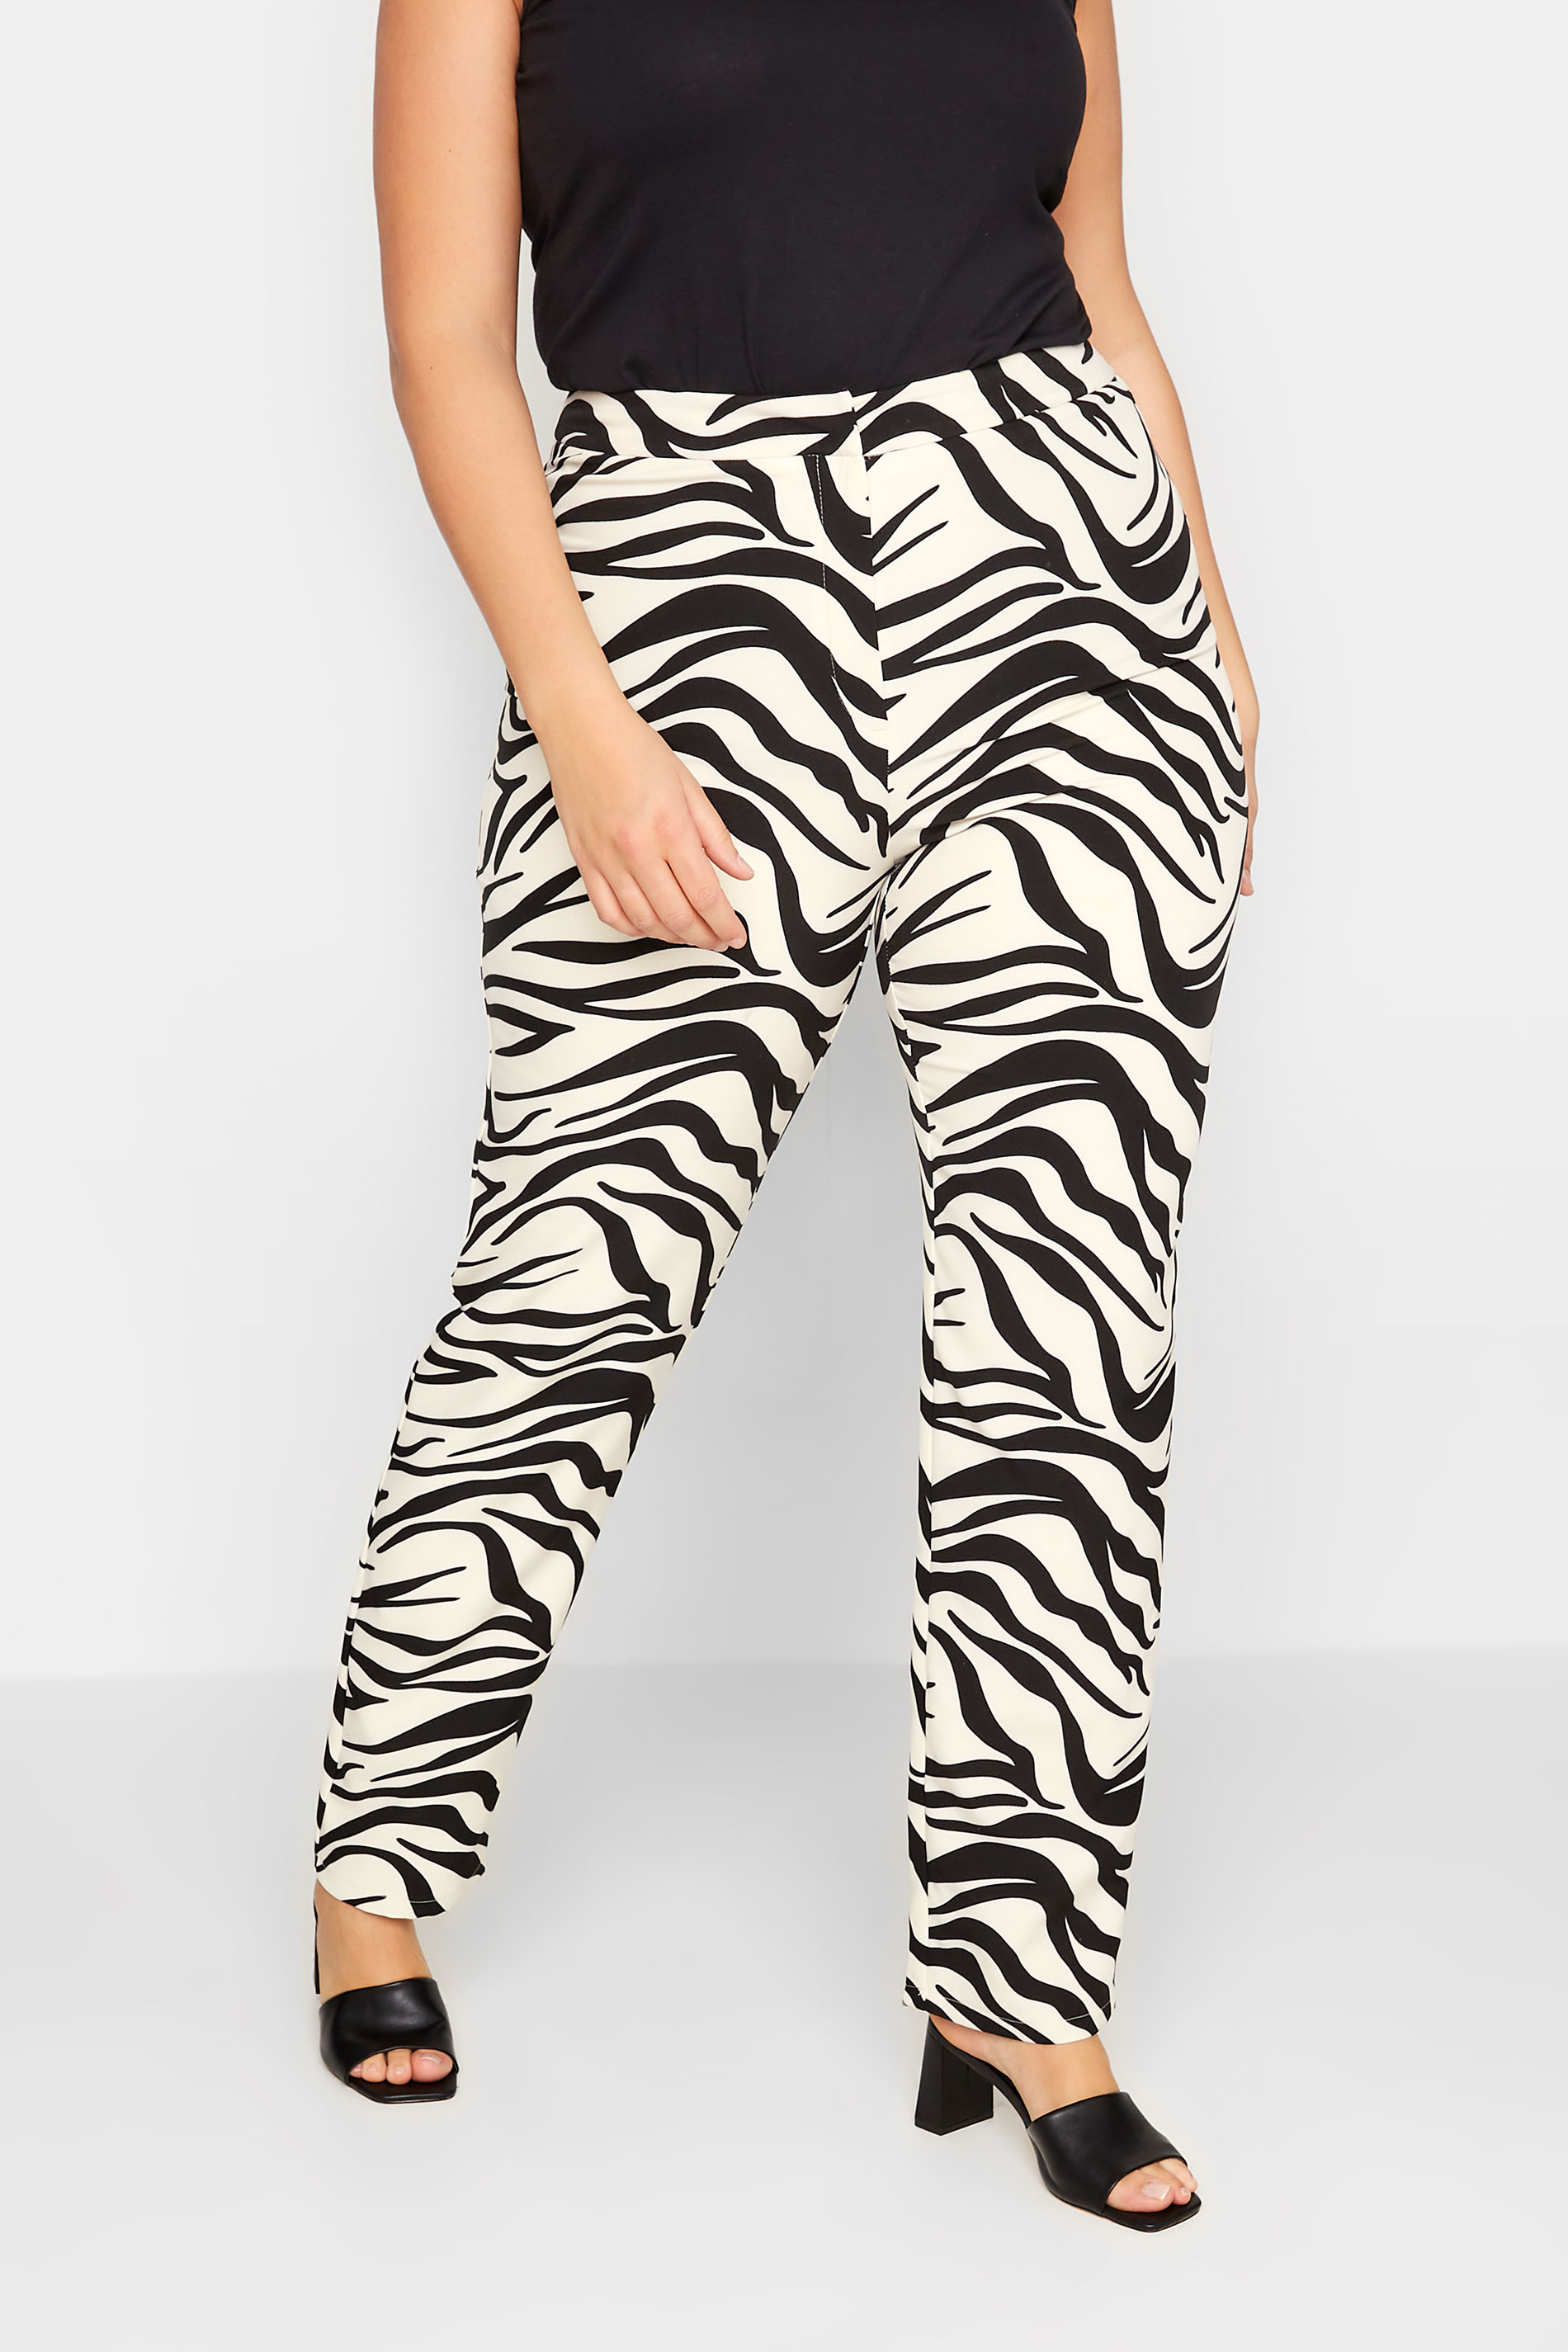 LTS Tall Black & White Zebra Print Slim Leg Trousers | Long Tall Sally 1